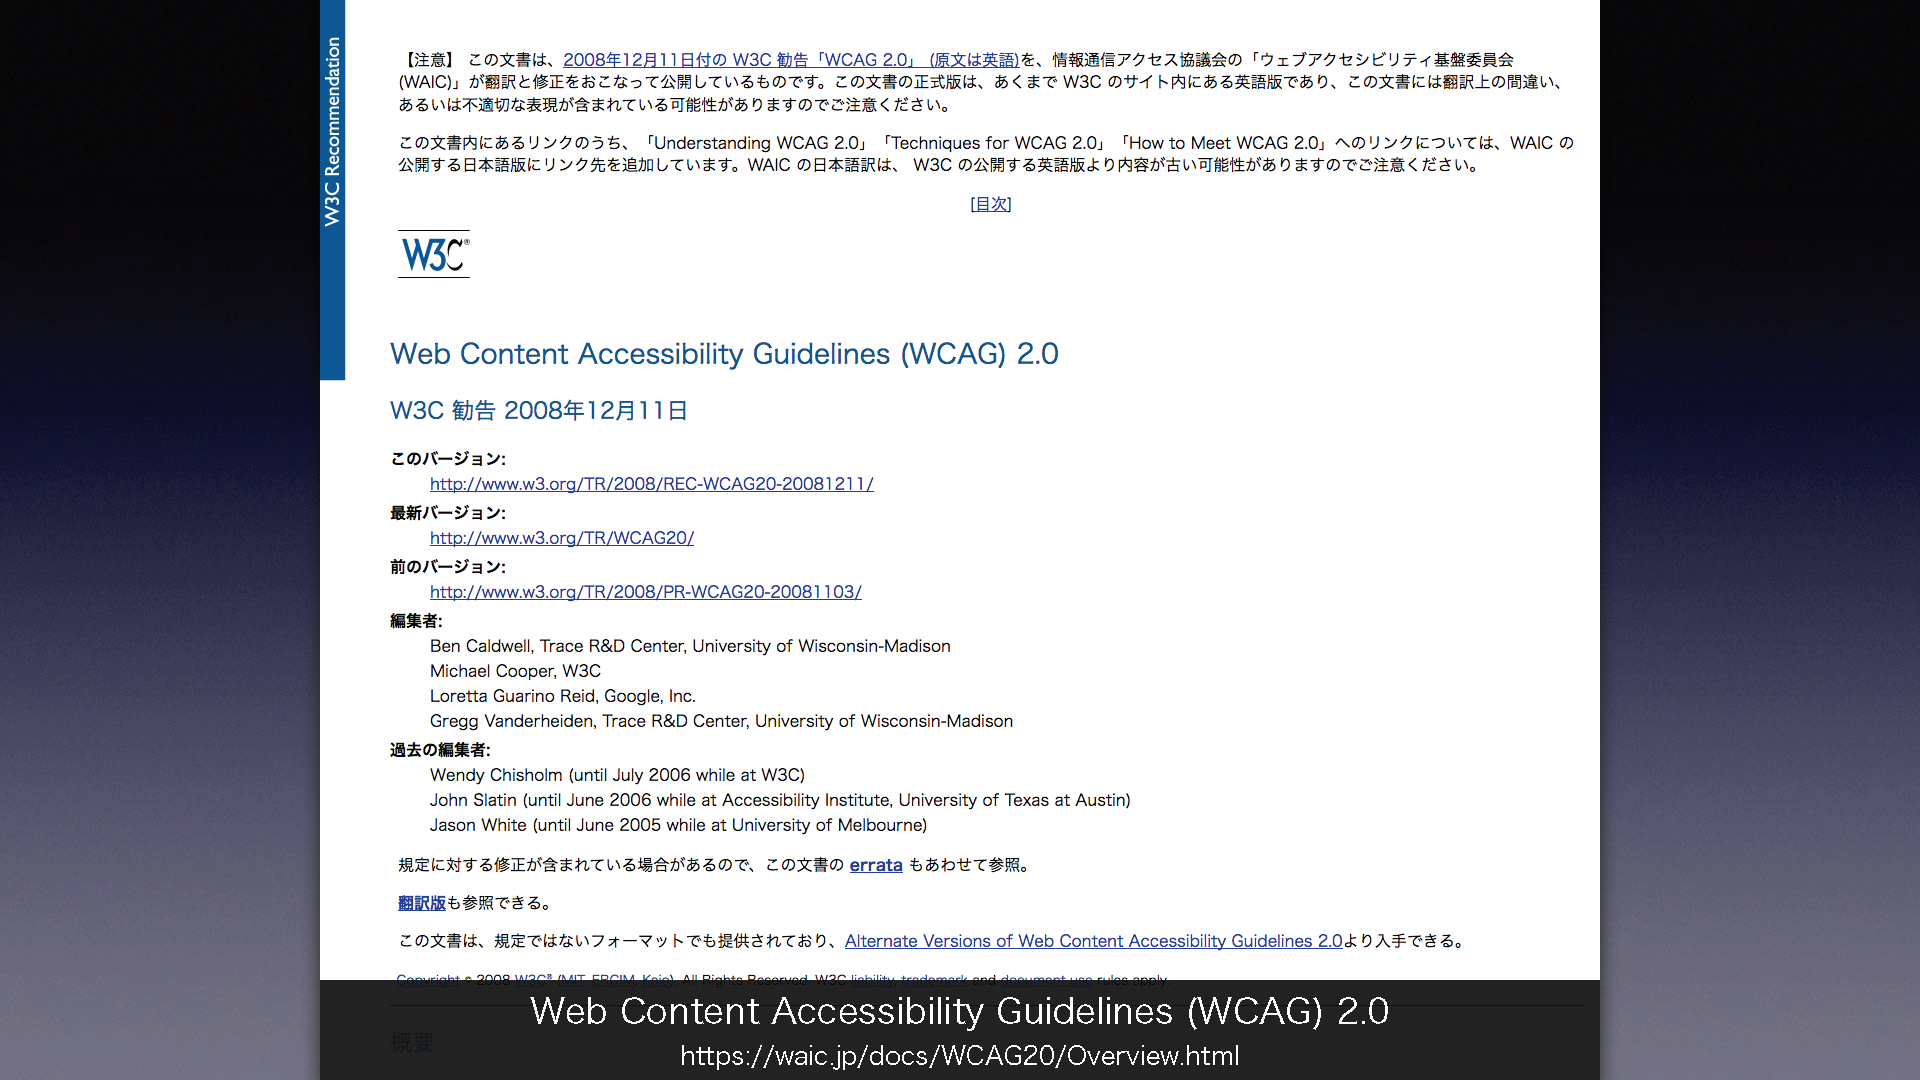 「Web Content Accessibility Guidelines (WCAG) 2.0」について掲載されたウェブページの画像
	